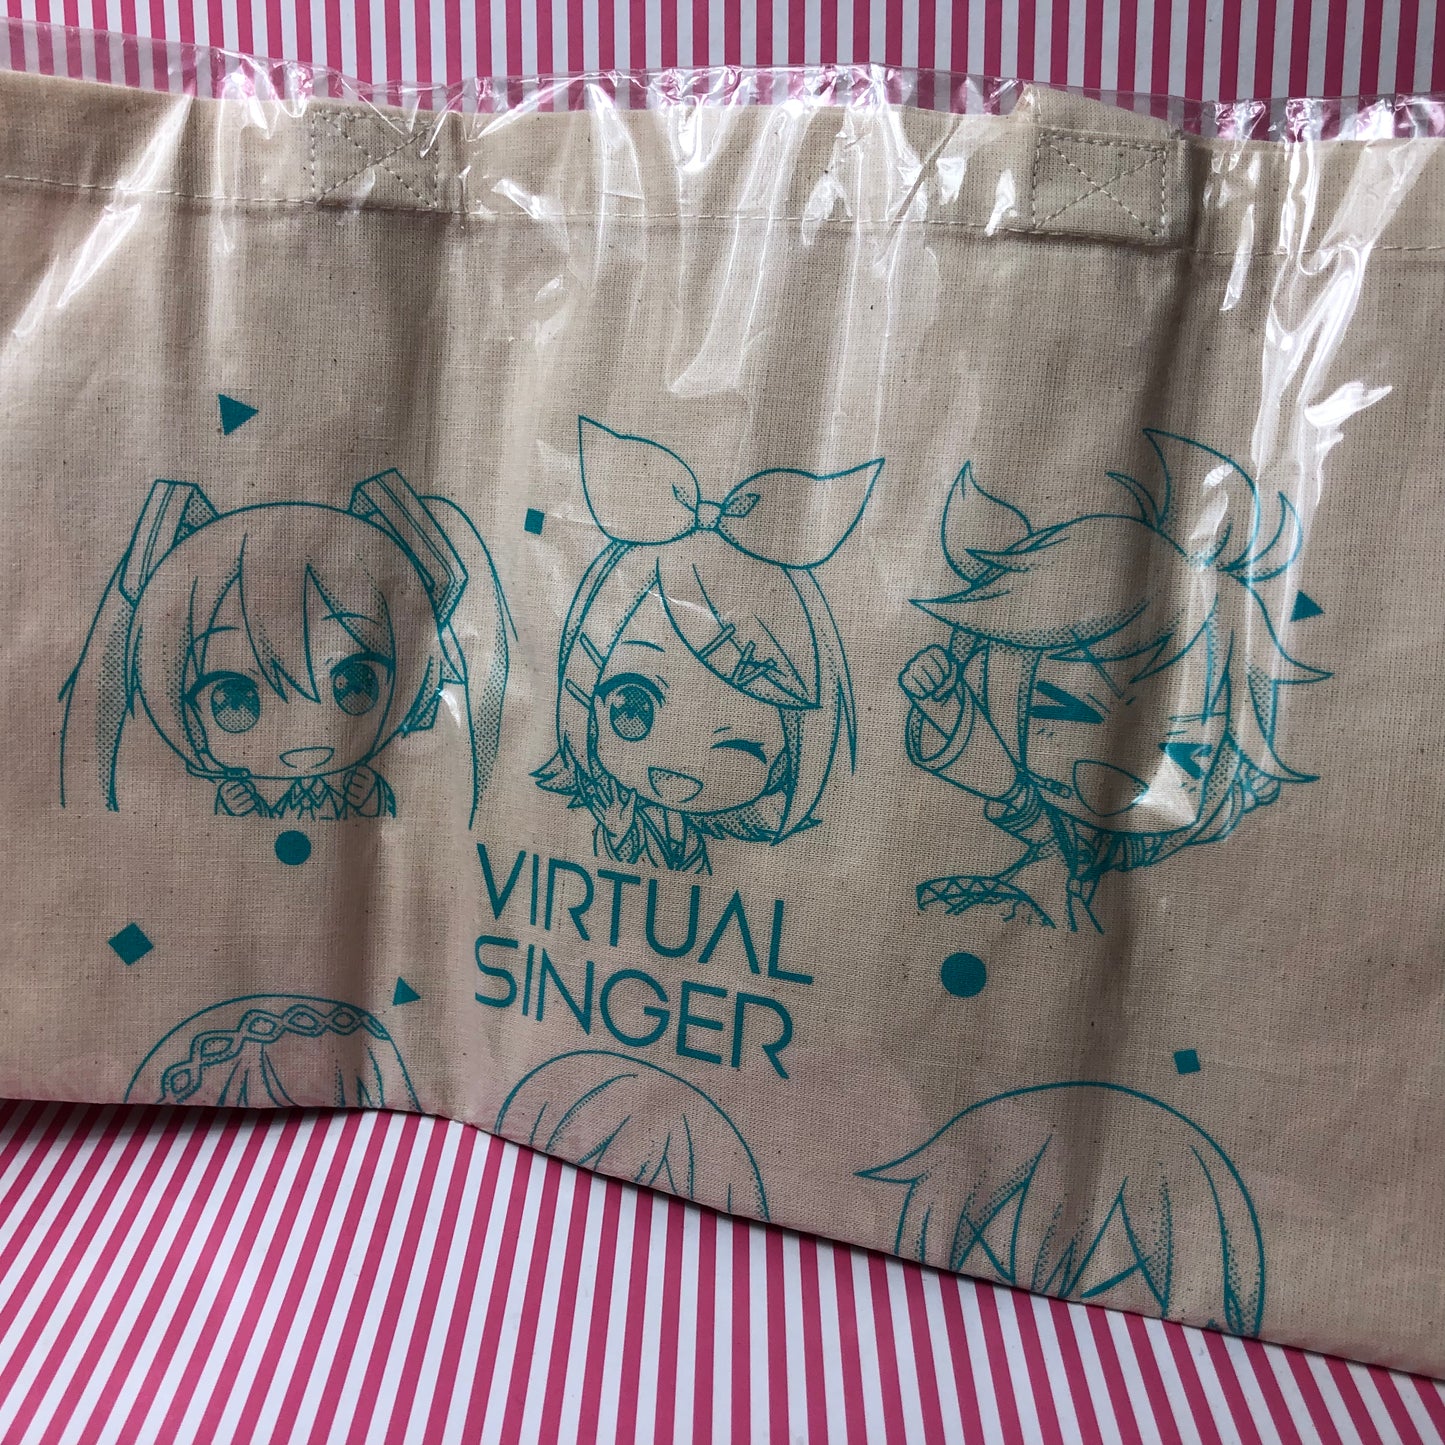 Project Sekai Vocaloid Virtual Singer Tote Bag